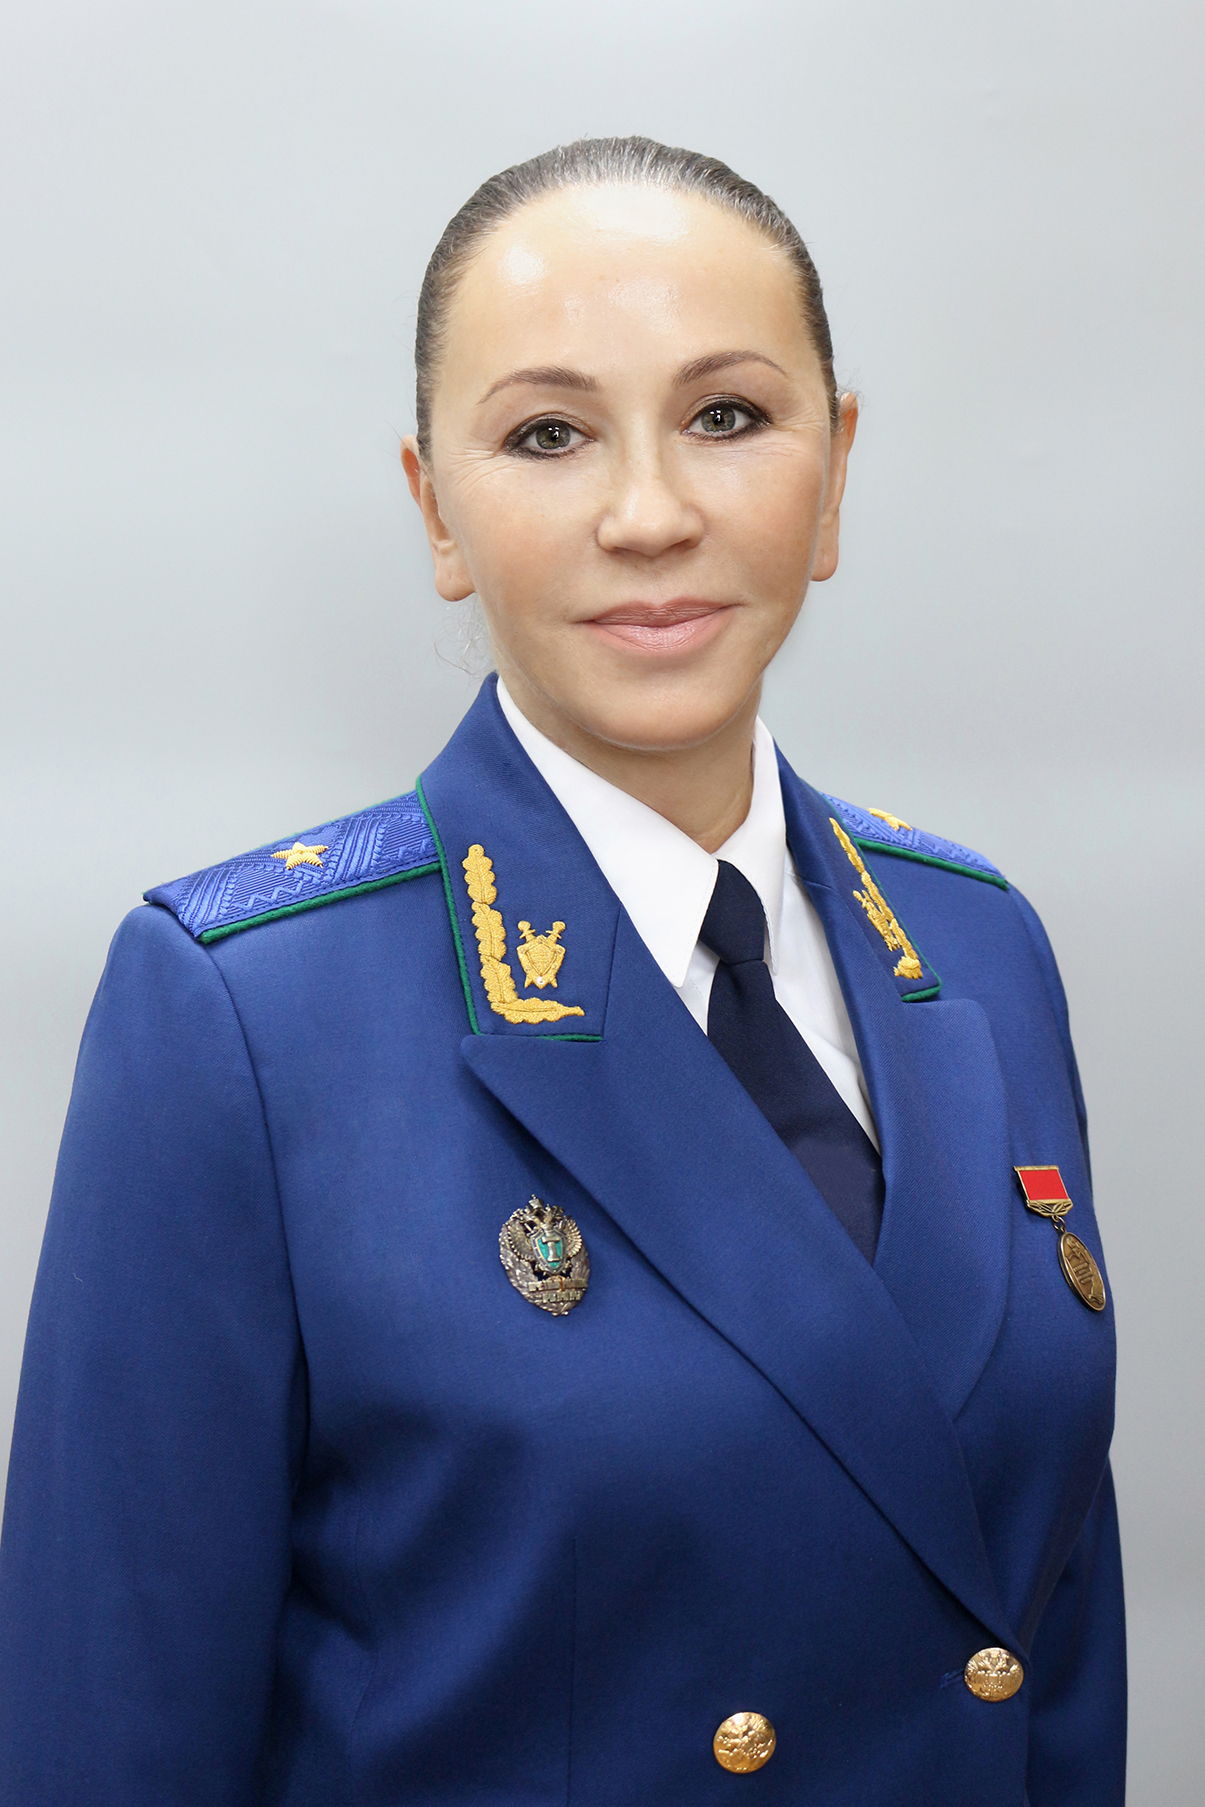                         Parkhomenko Svetlana
            